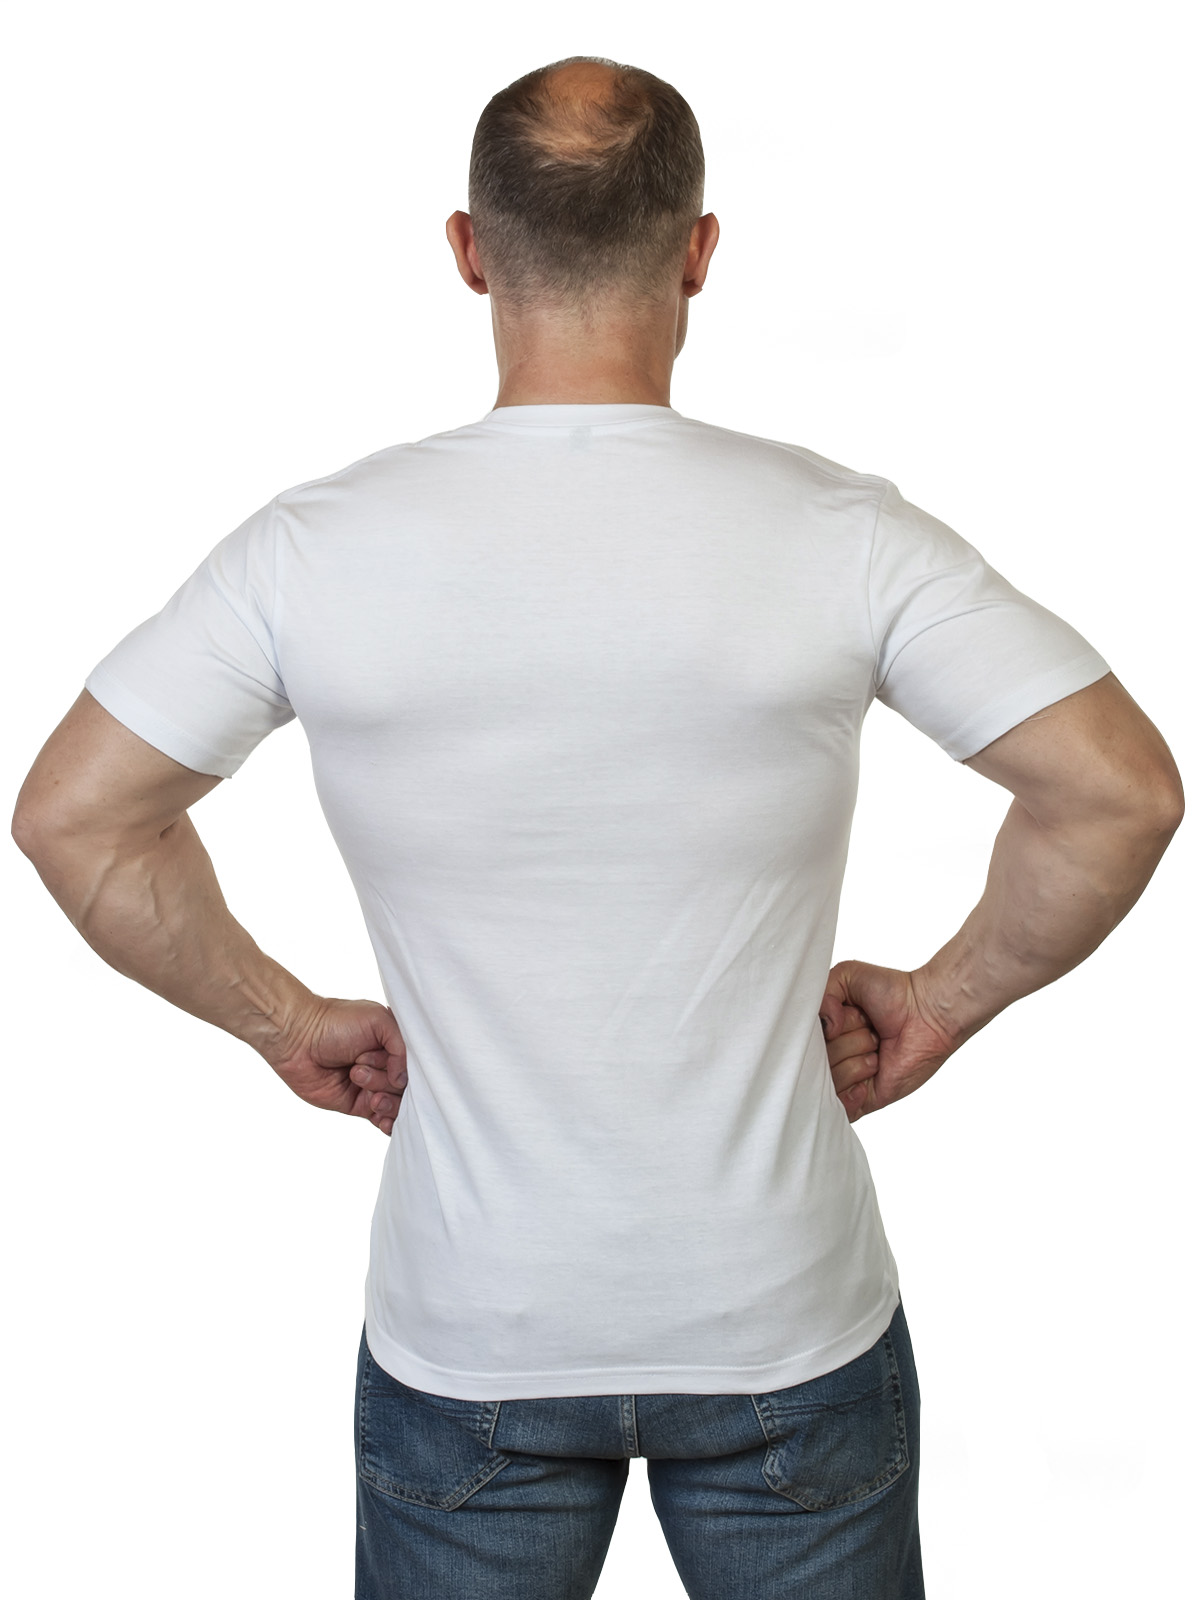 Мужская белая футболка с крутым принтом "Спецназ" 